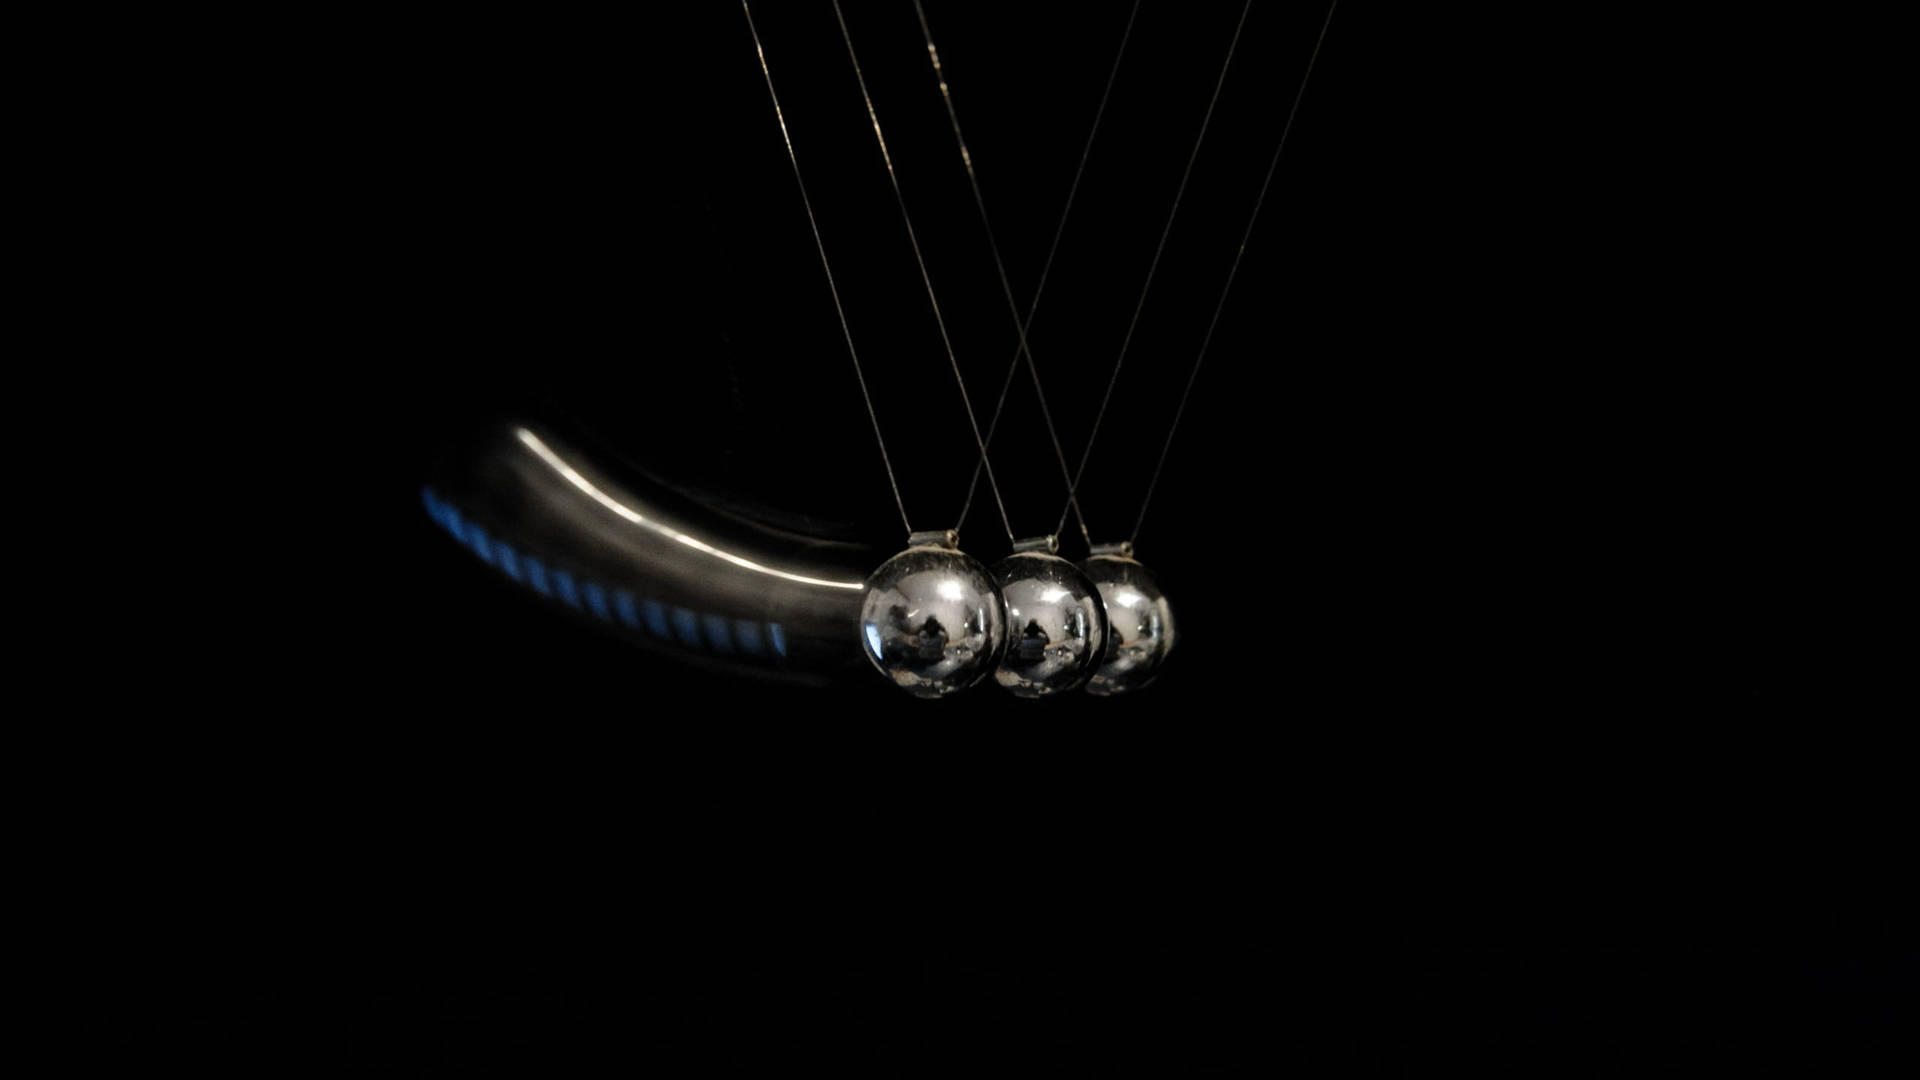 Black Dynamic Pendulum Swing Picture